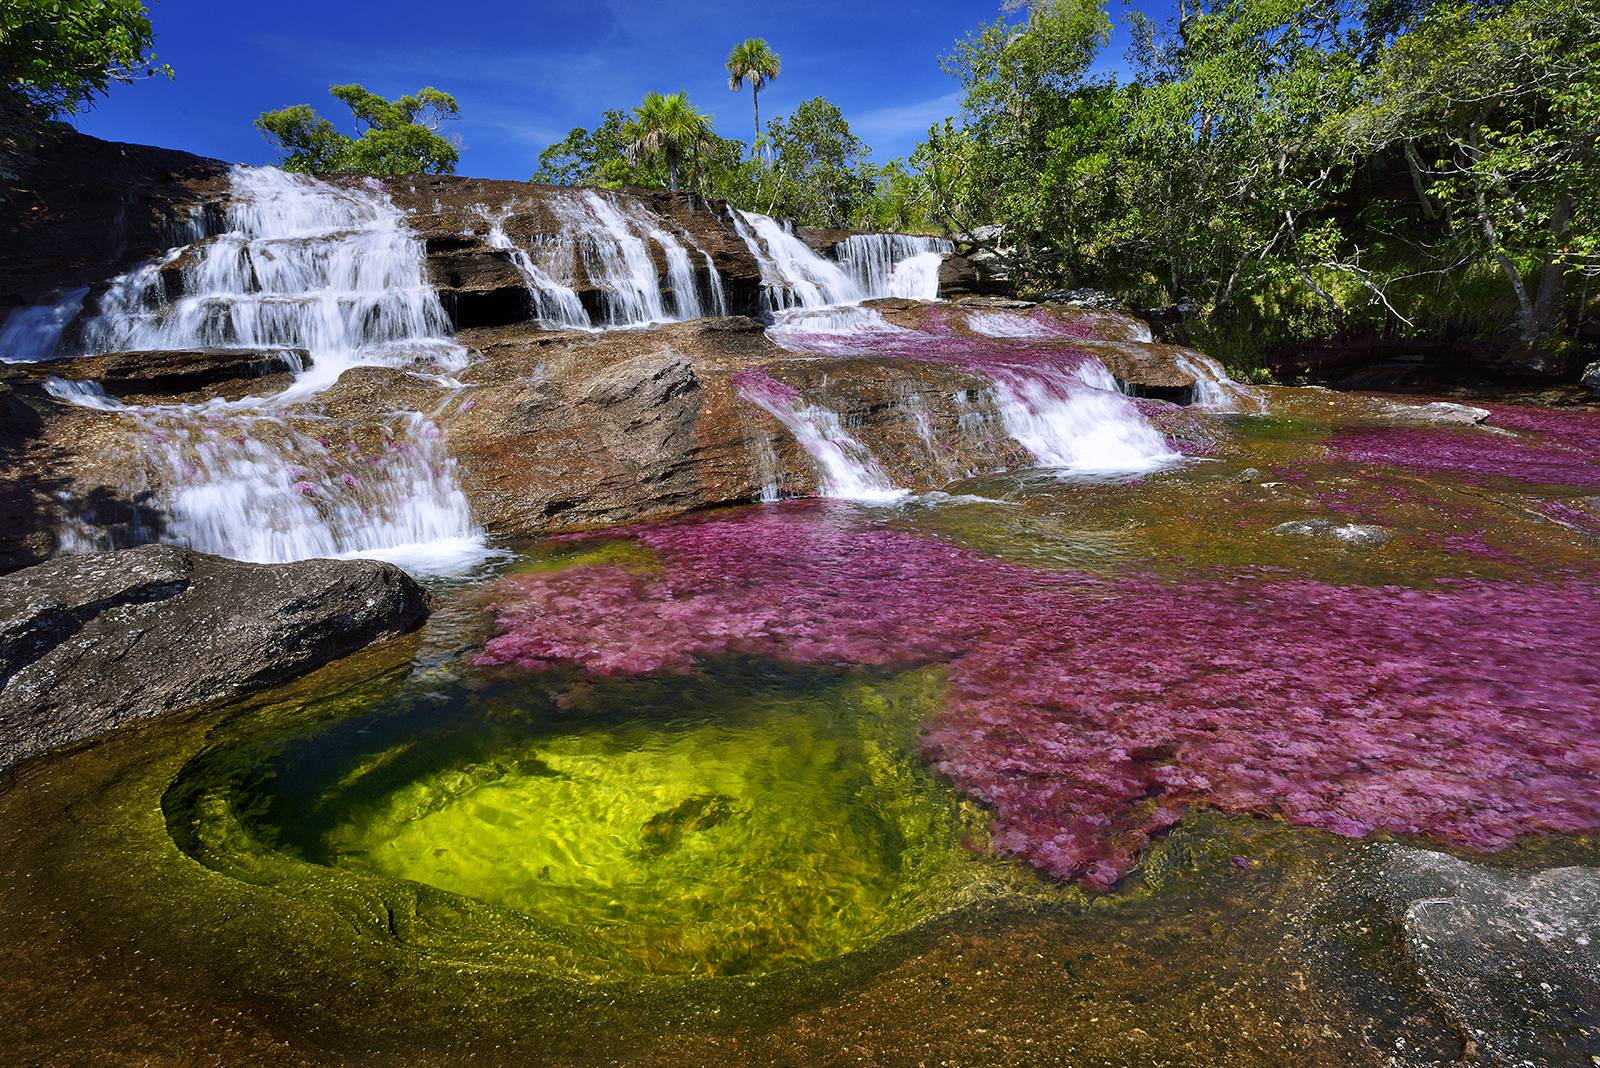 Caño Cristales – The River of Seven Colors